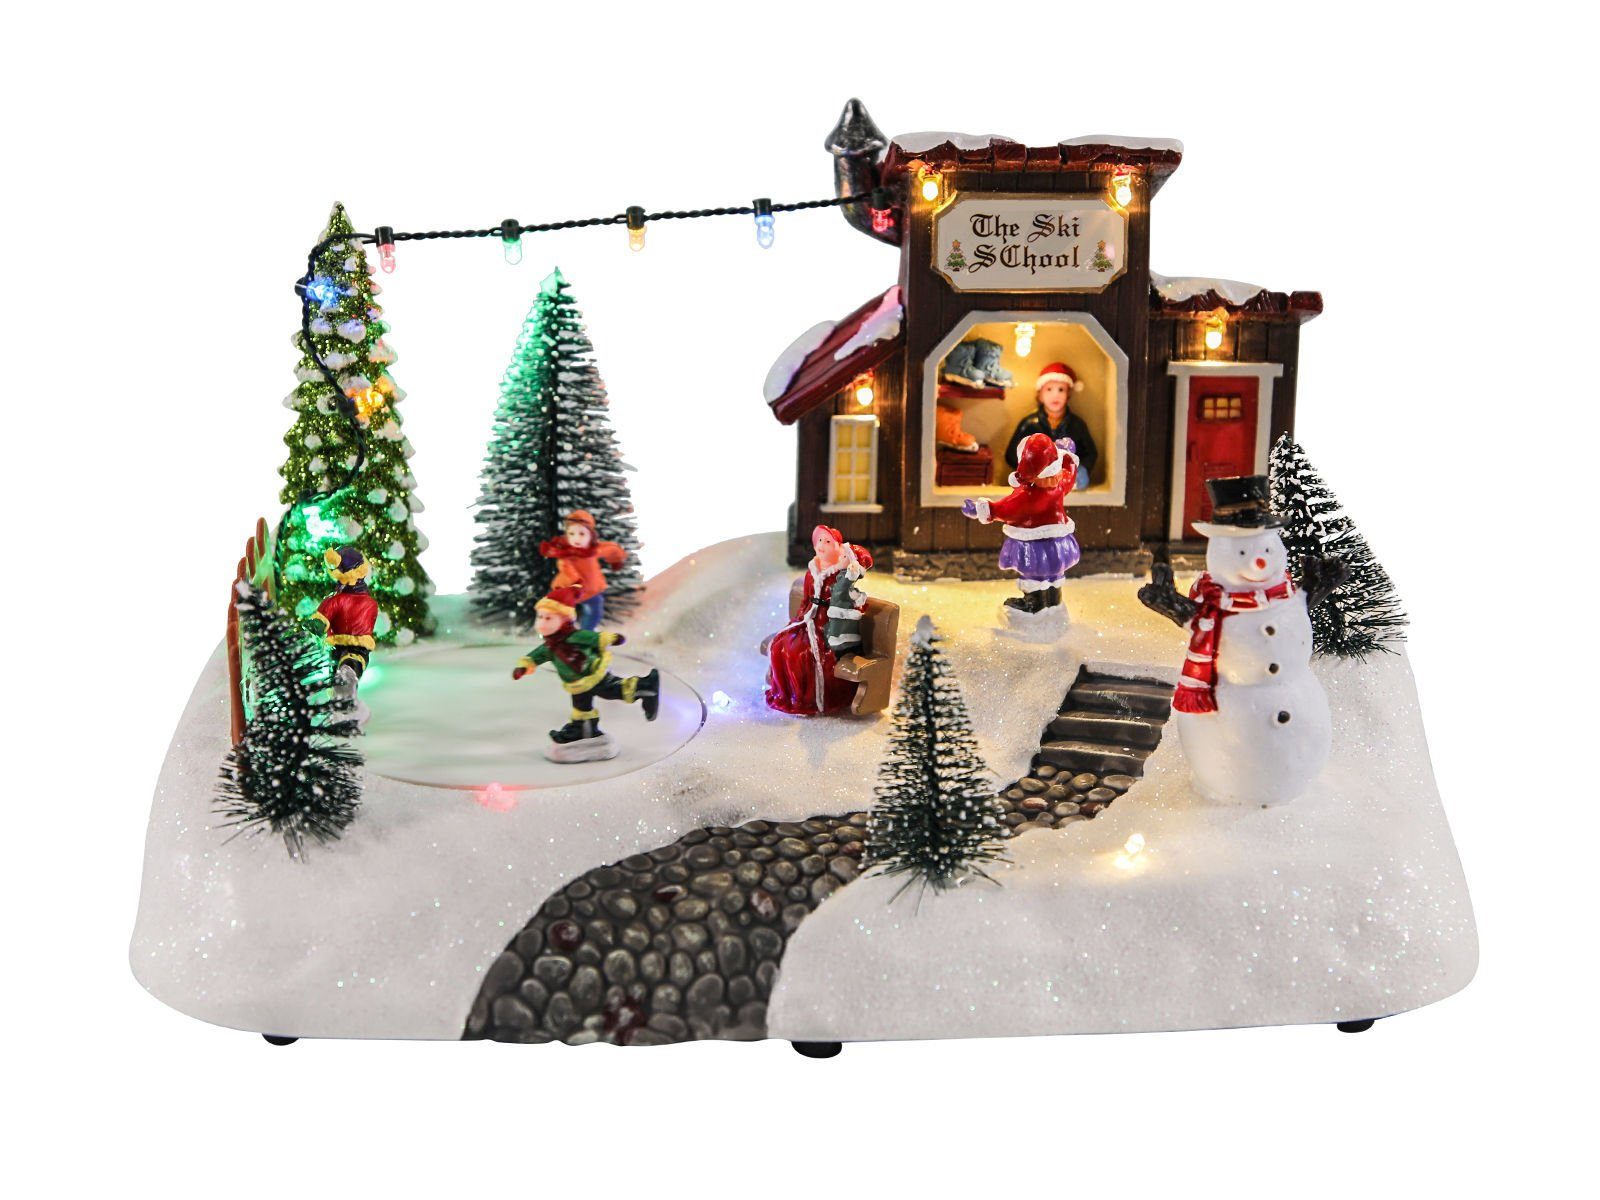 Spetebo Weihnachtsszene Eisbahn SCHOOL fahrenden - Figuren SKI THE mit